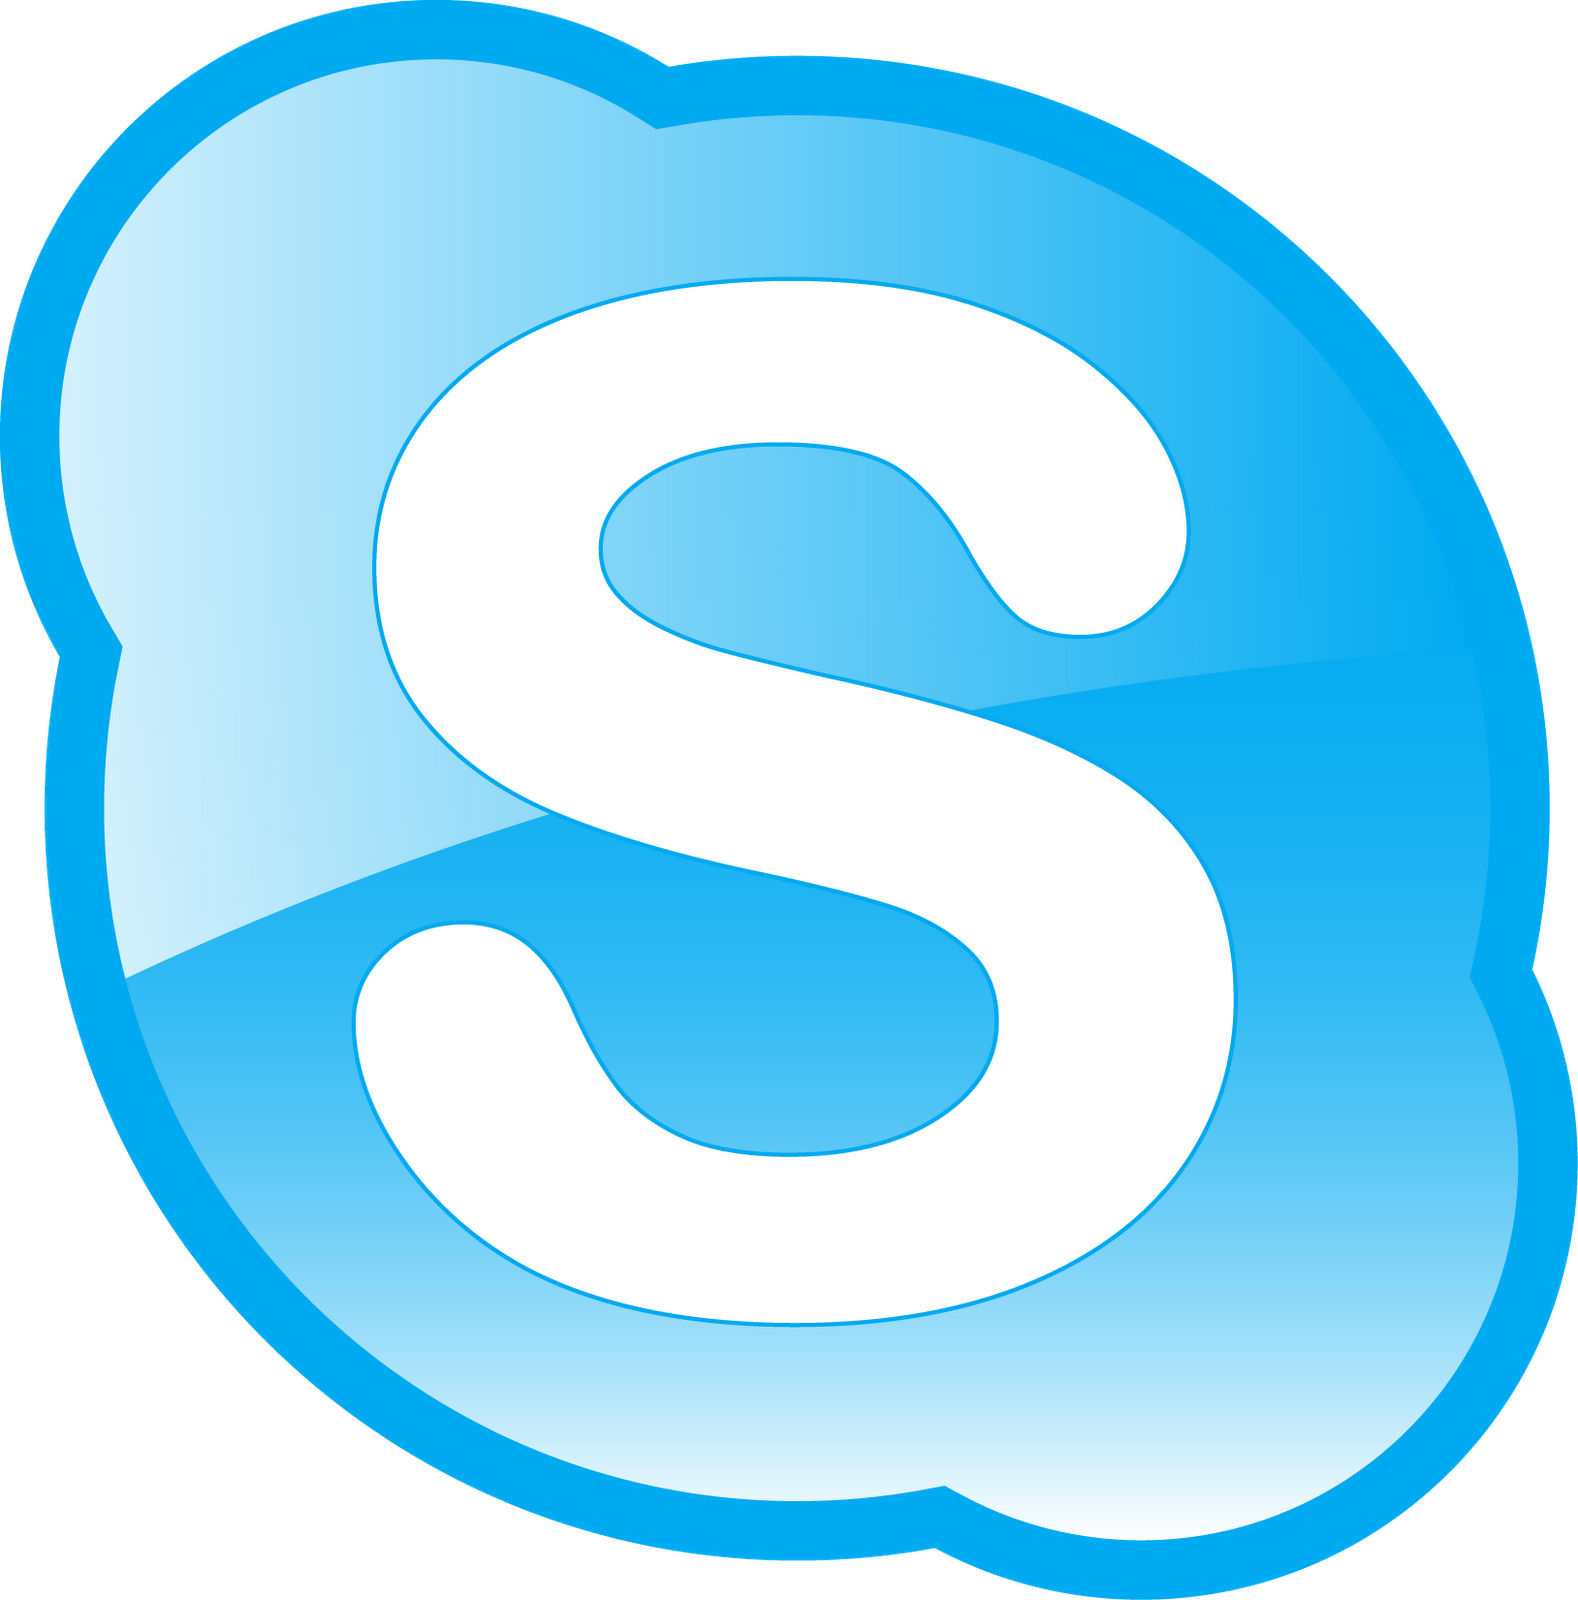 skype technologies